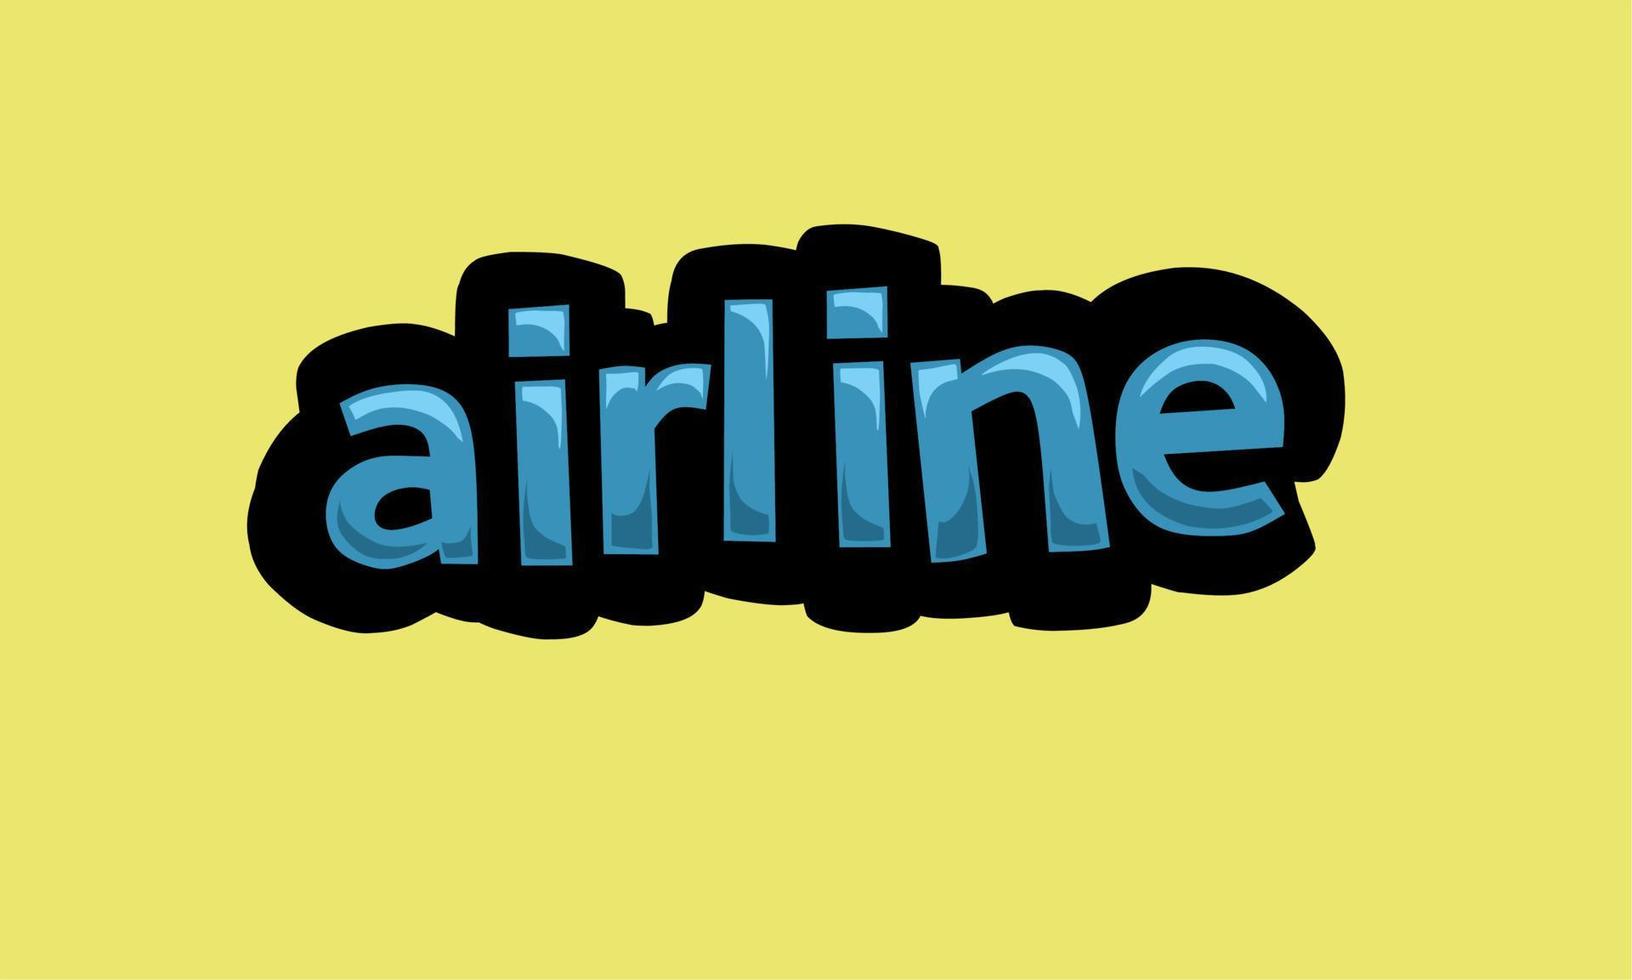 diseño de vector de escritura de aerolínea sobre un fondo amarillo